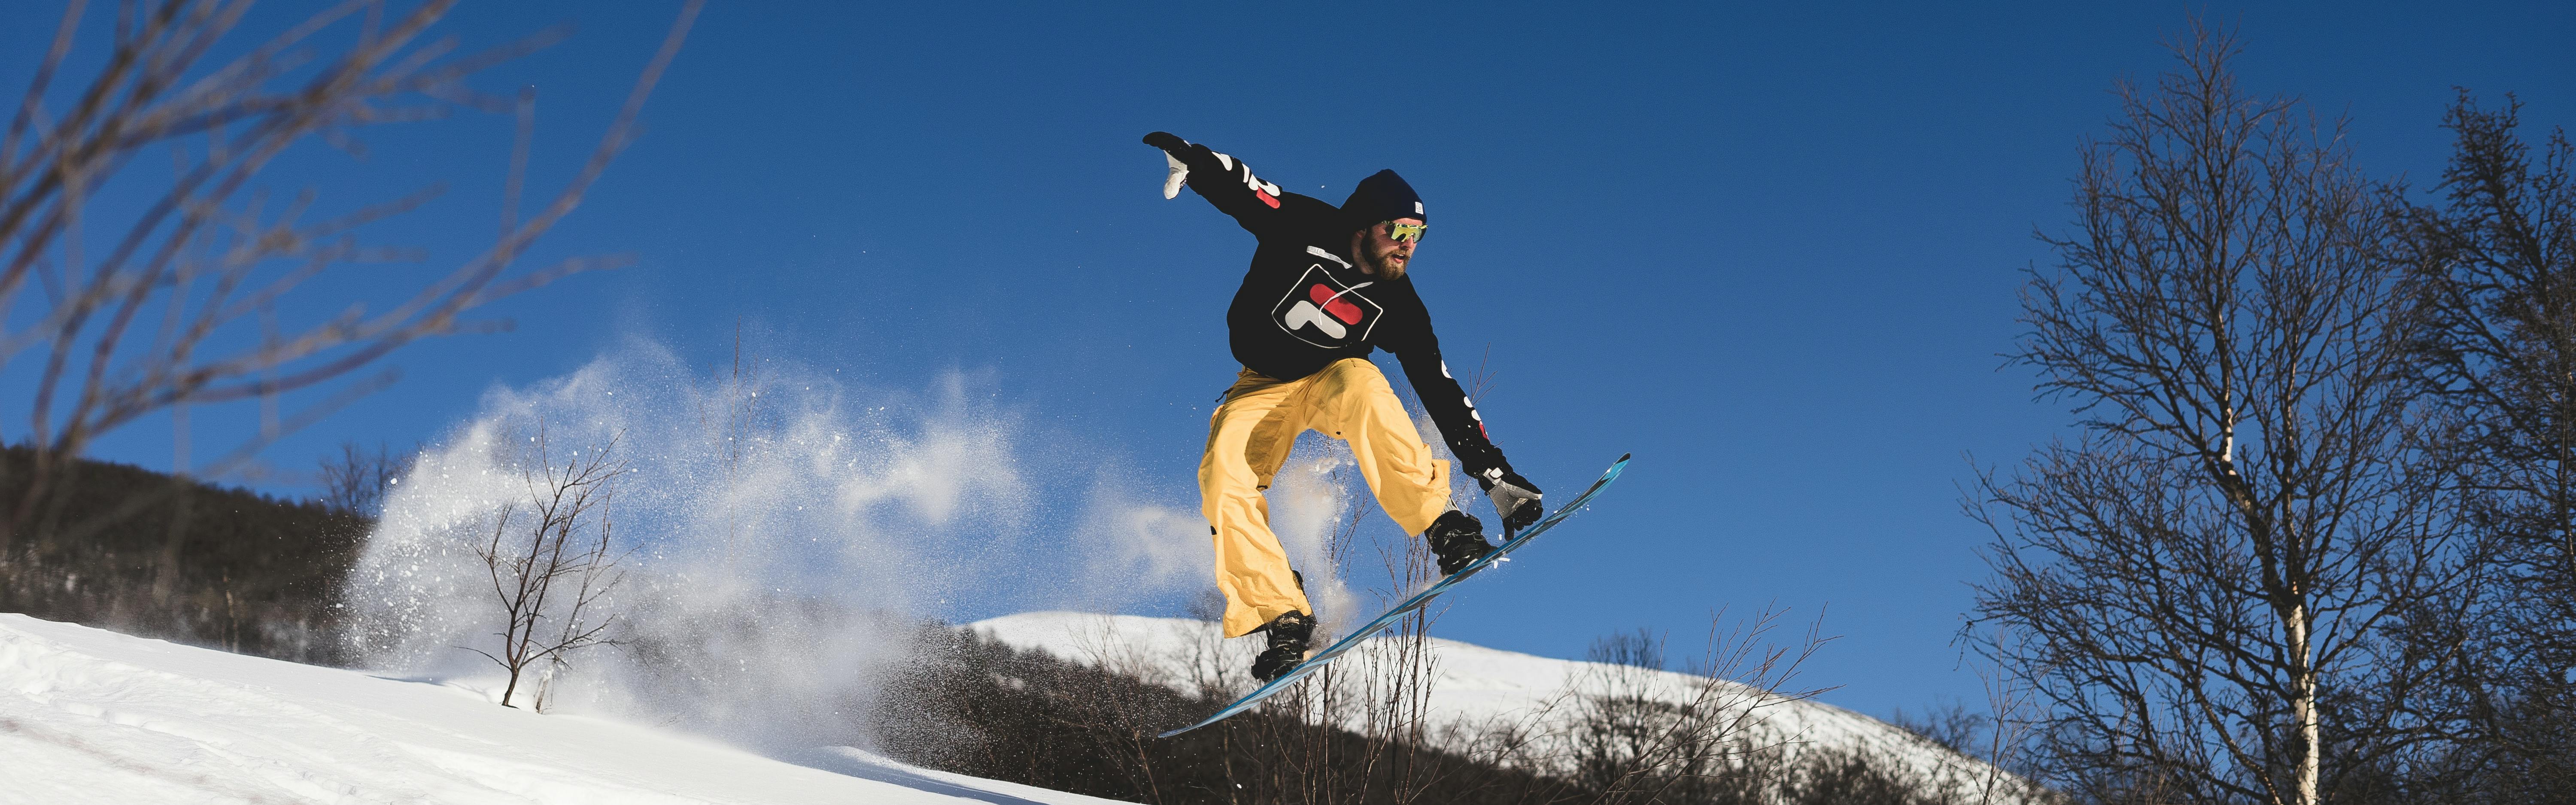 A snowboarder jumping and grabbing his board.